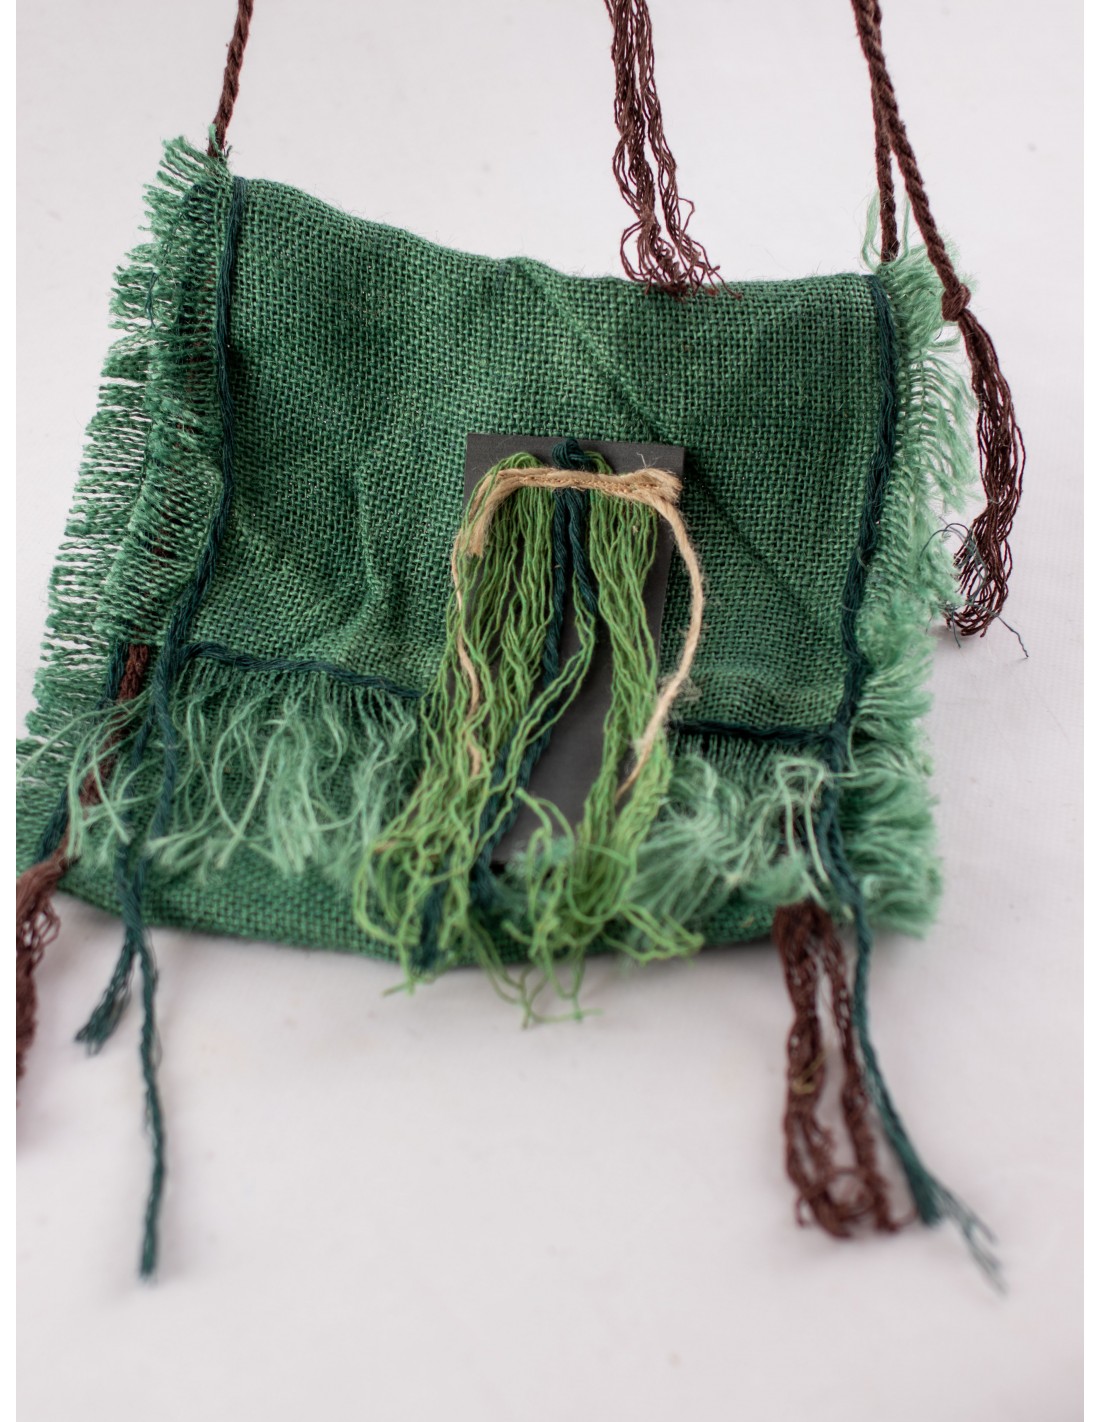 DIY Jute Bag | How to Make Handmade Ladies Purse with Jute Rope | Ladies Bag  with Jute Craft Idea - YouTube